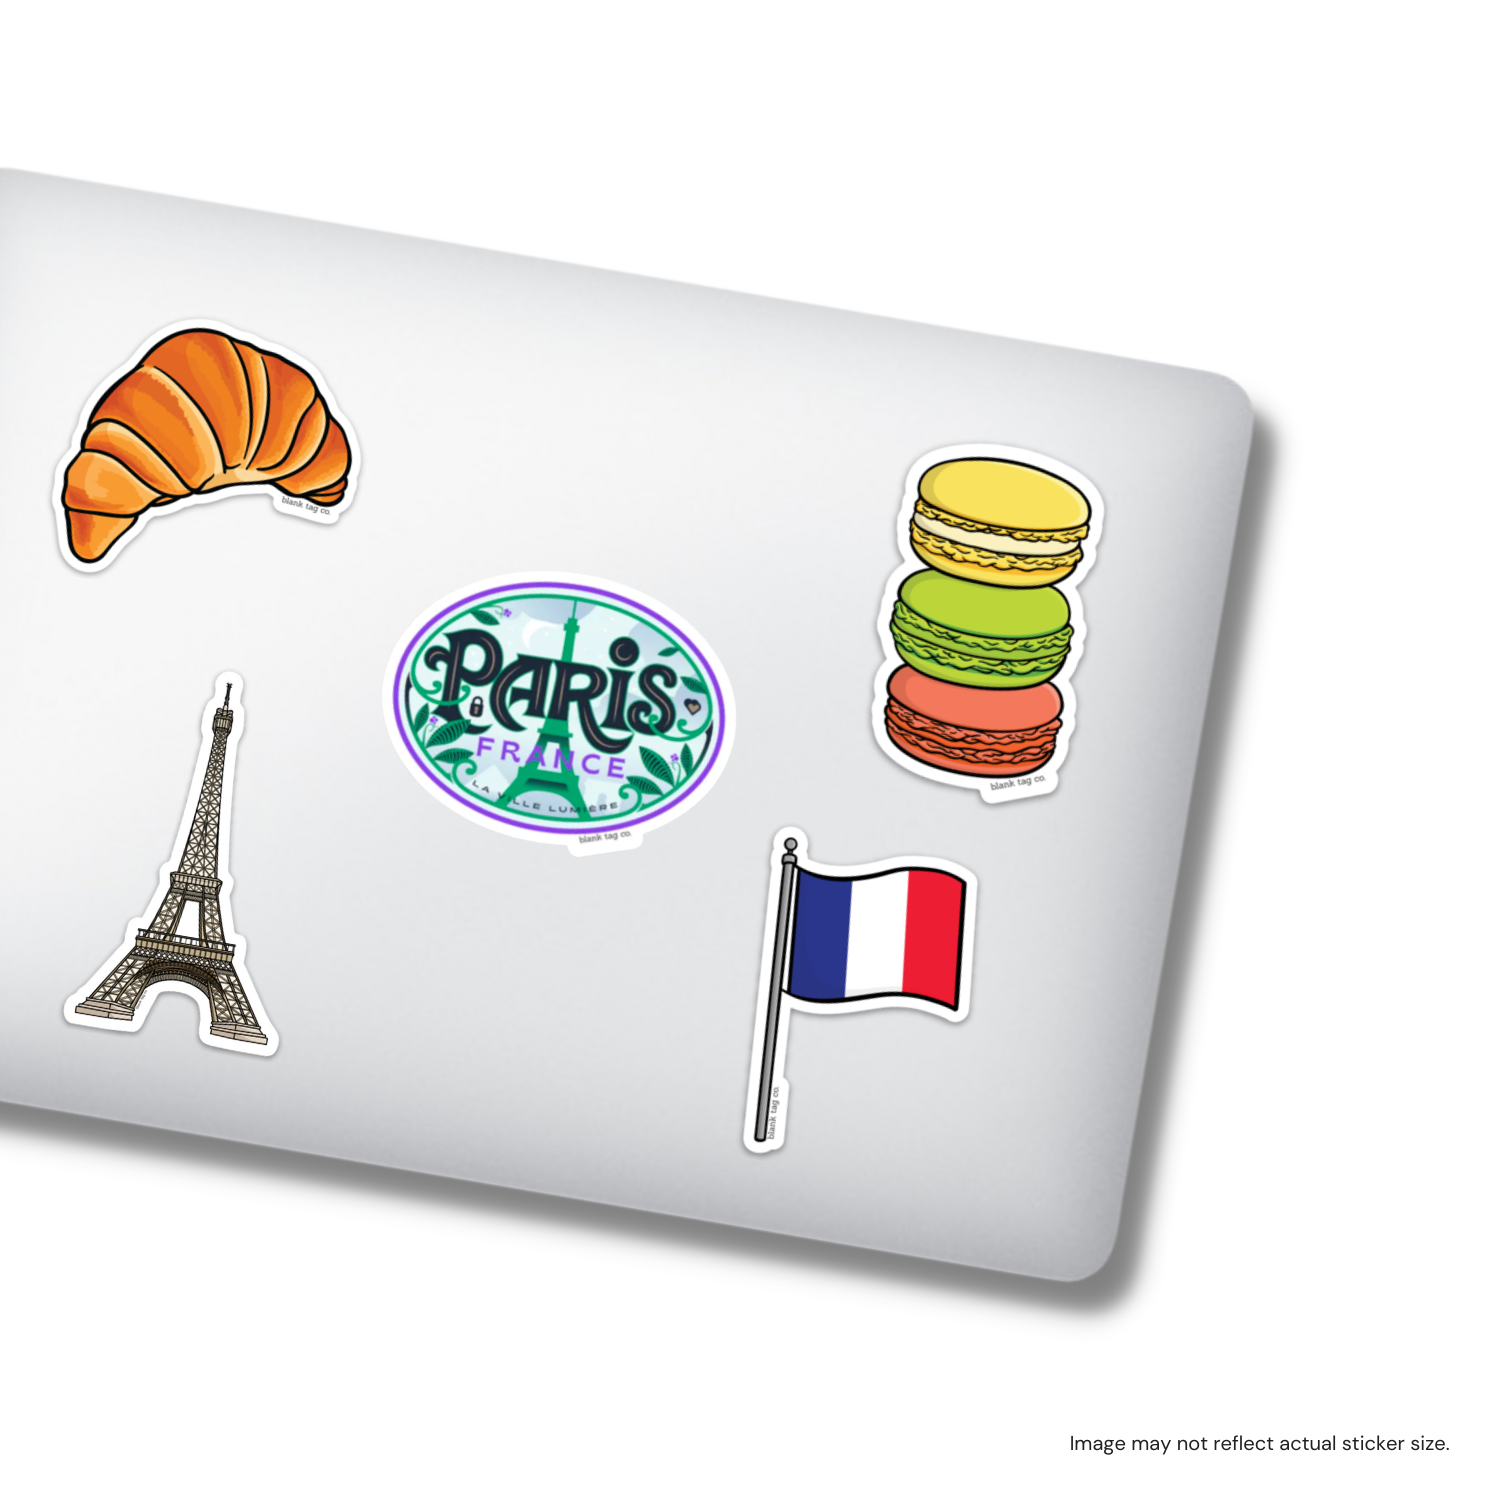 The Paris City Badge Sticker